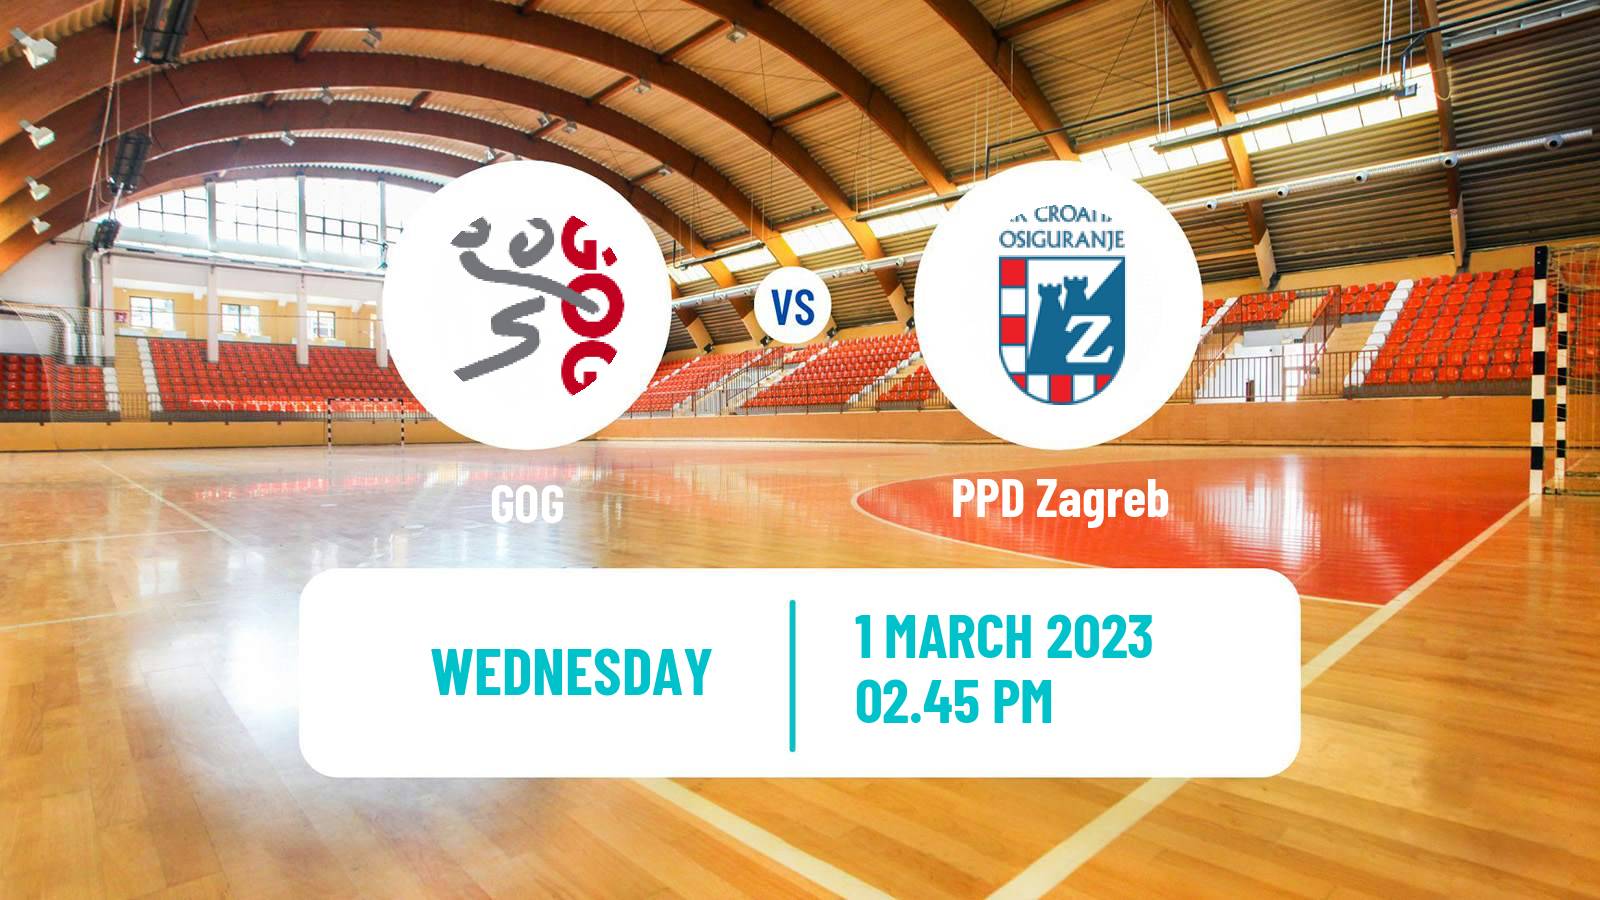 Handball EHF Champions League GOG - PPD Zagreb